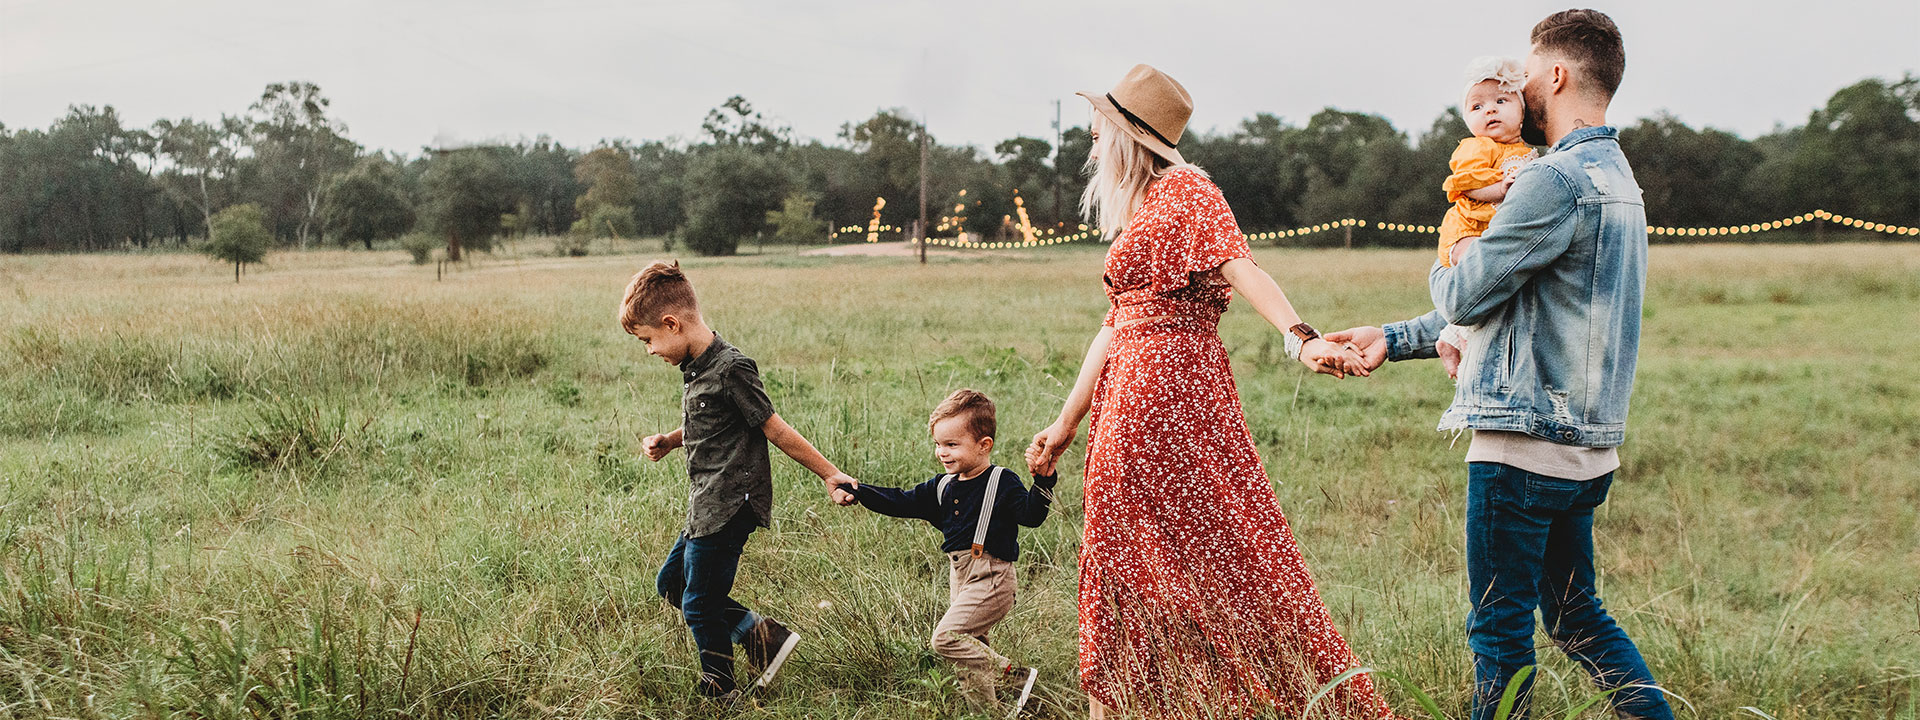 Family walking through a field.